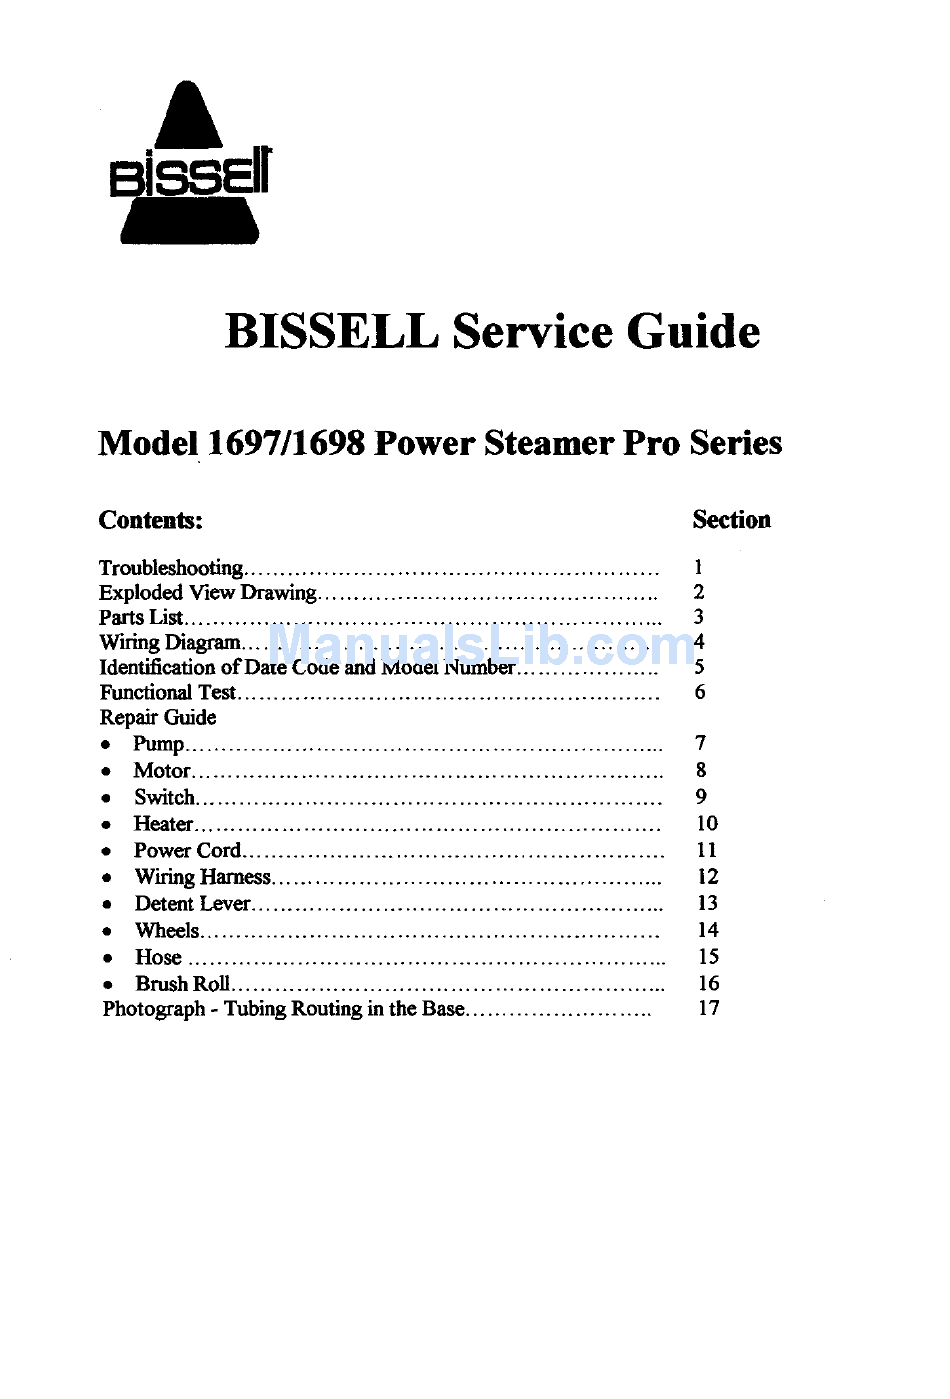 BISSELL 1697 SERVICE MANUAL Pdf Download | ManualsLib